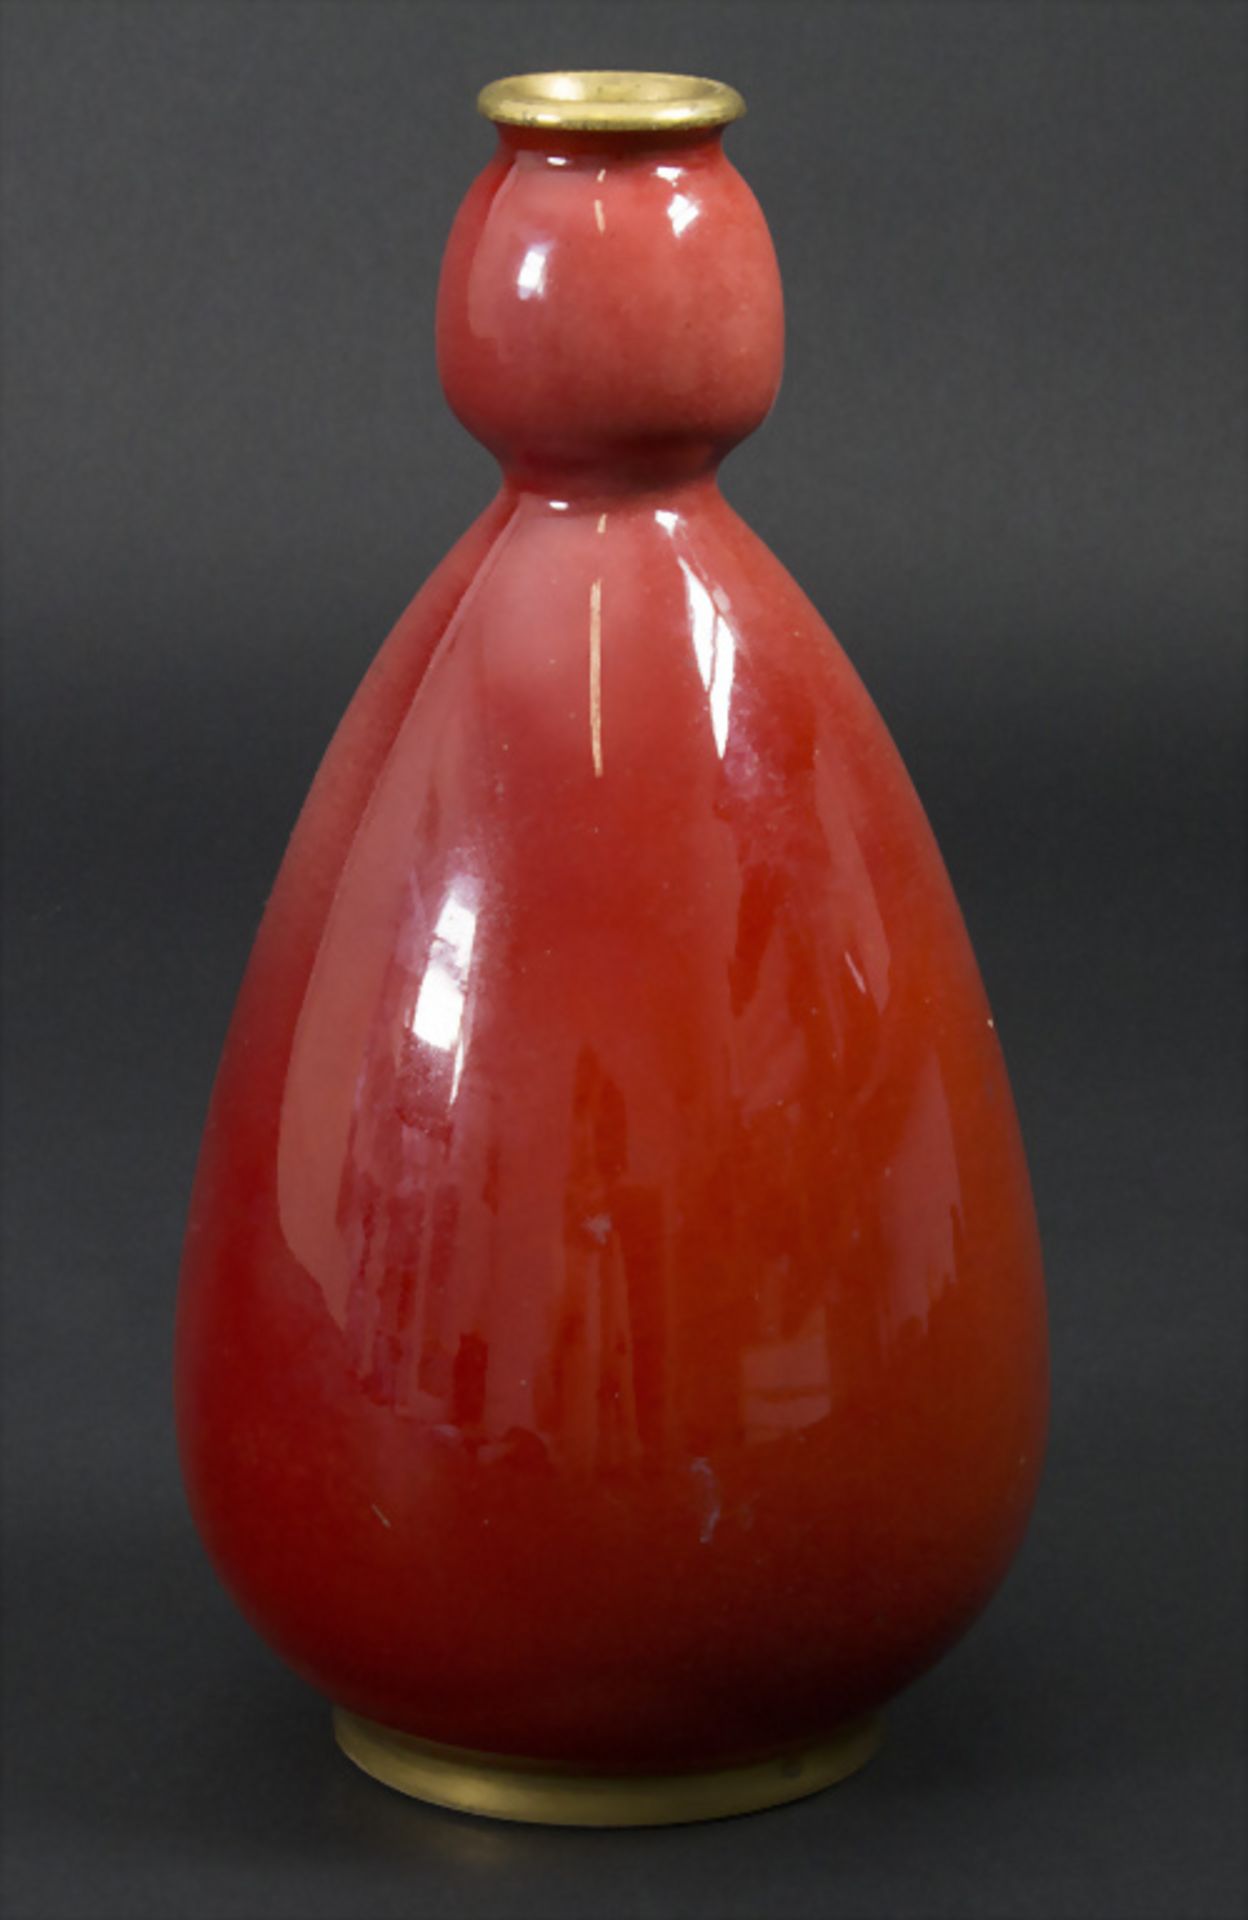 Rote Flaschenkürbisvase / A red pumpin shaped vase, Zsolnay, Pecs, um 1900